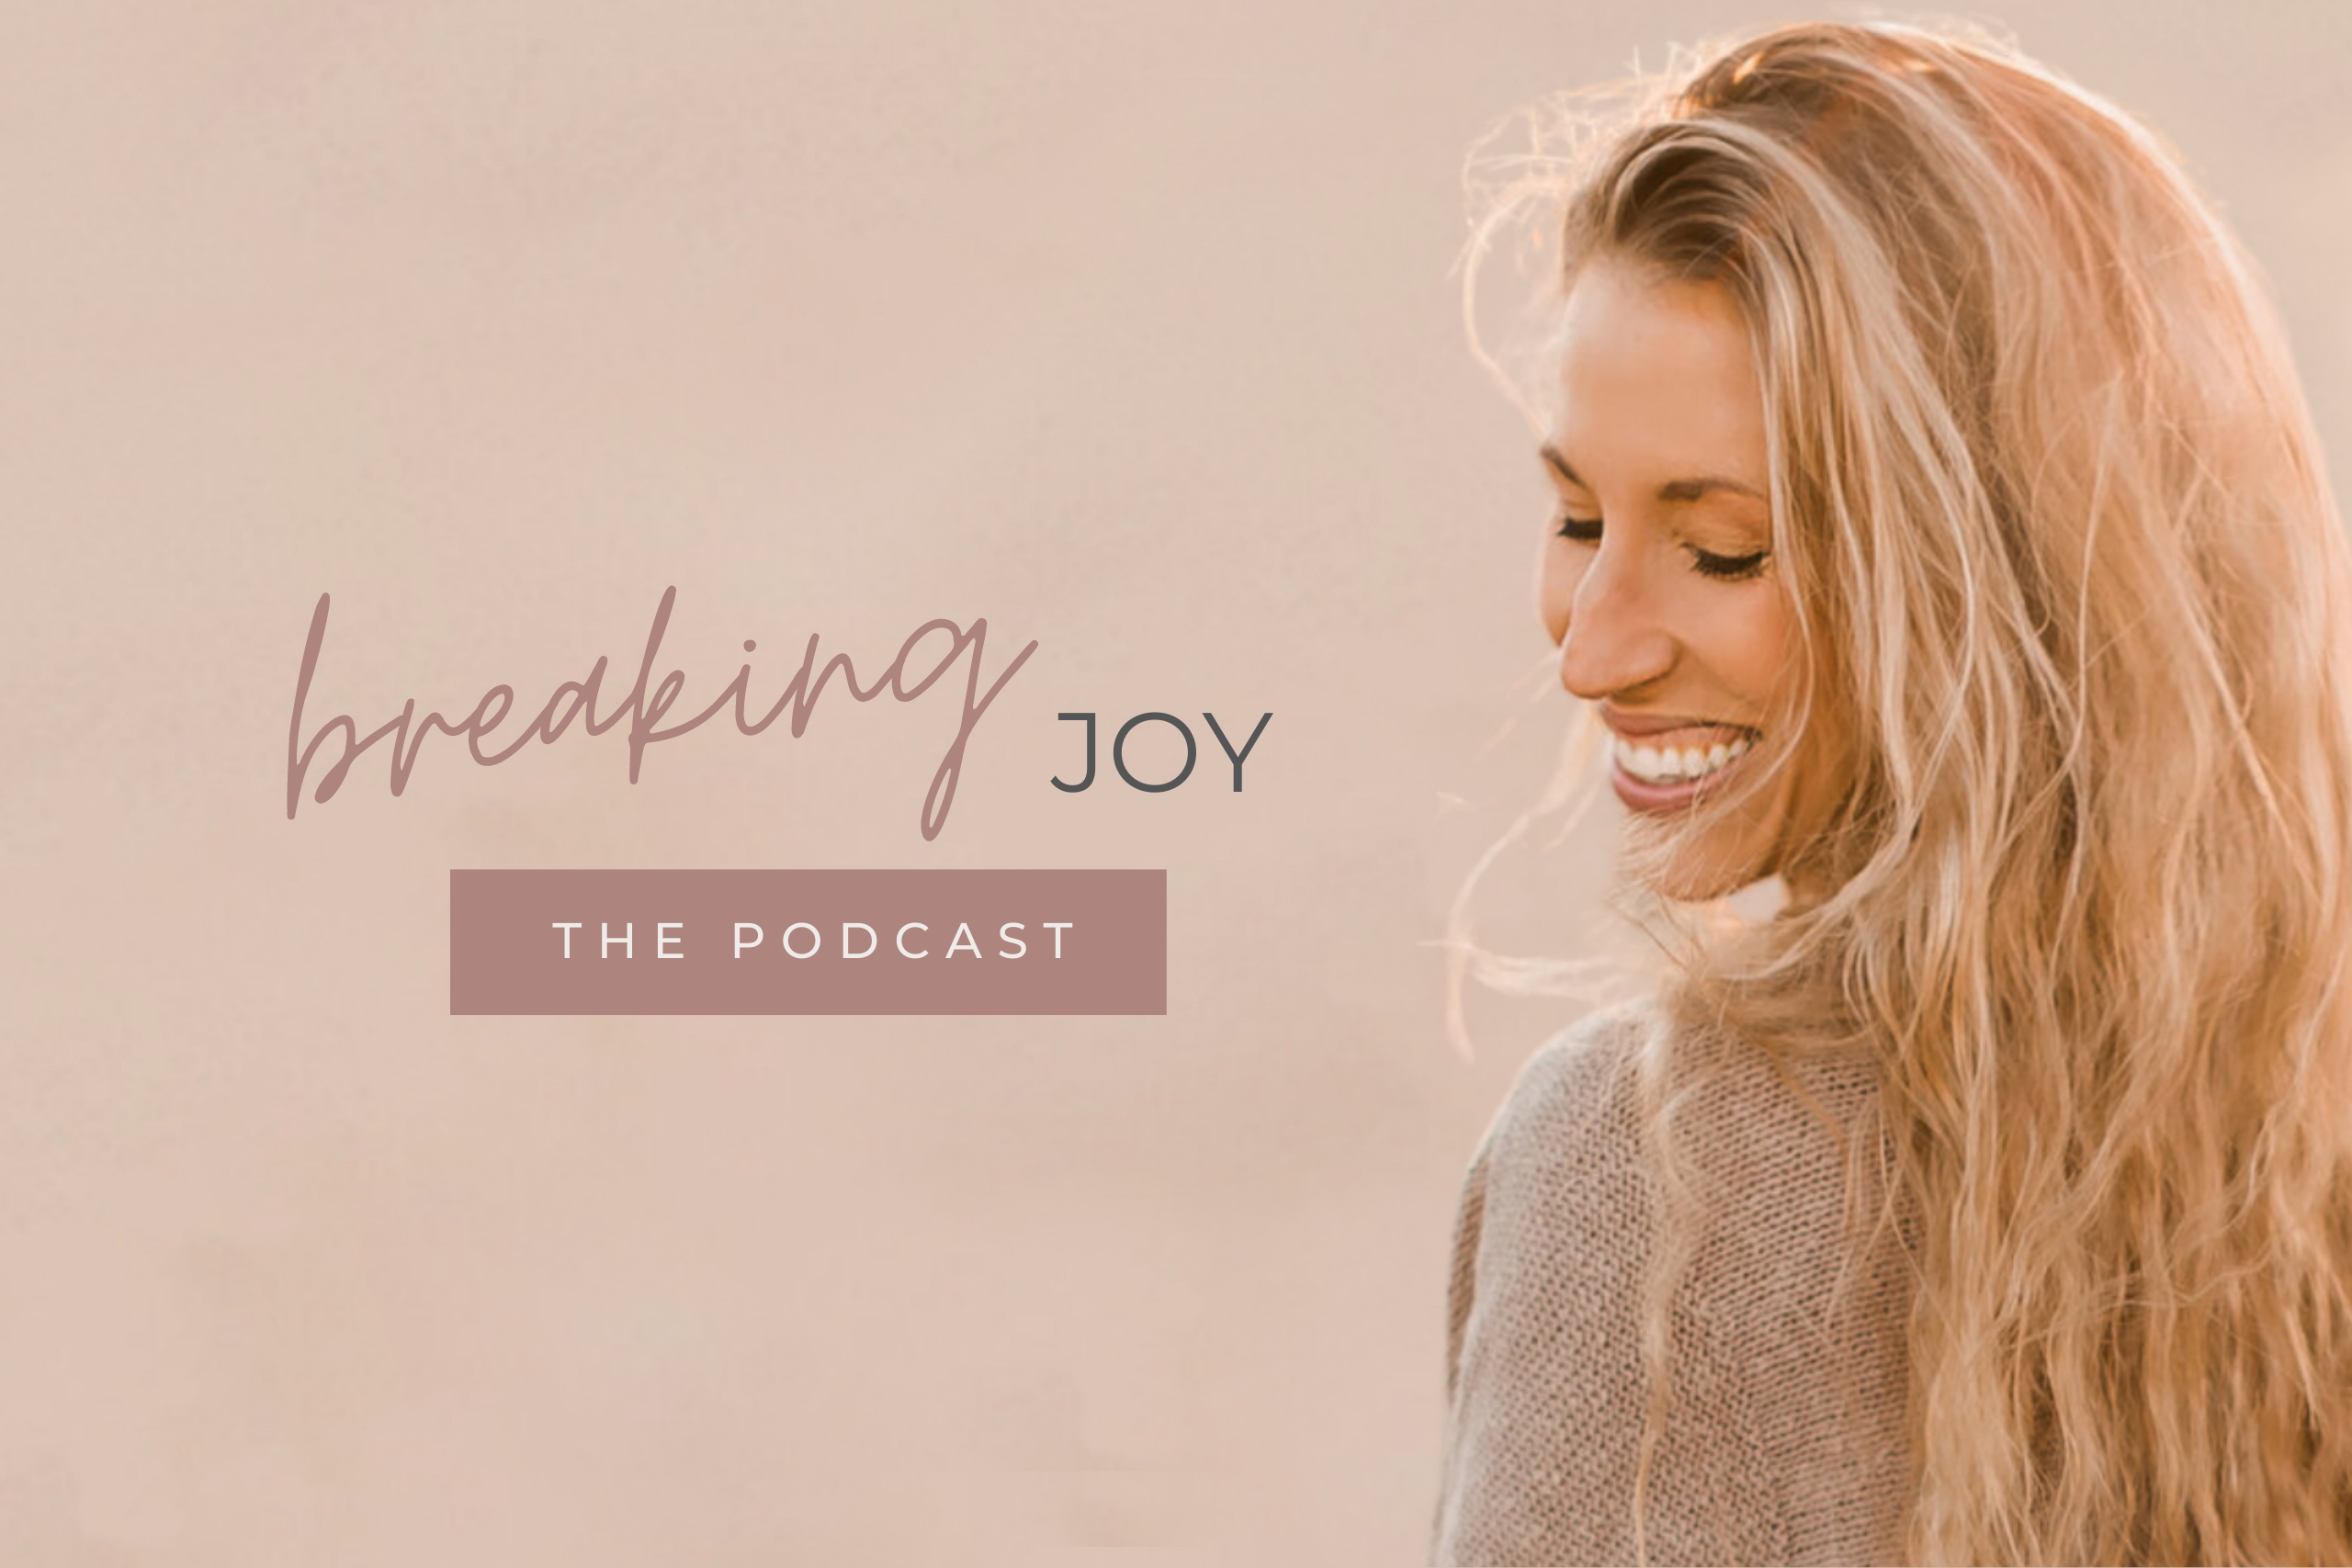 breaking joy podcast with sharon elizabeth